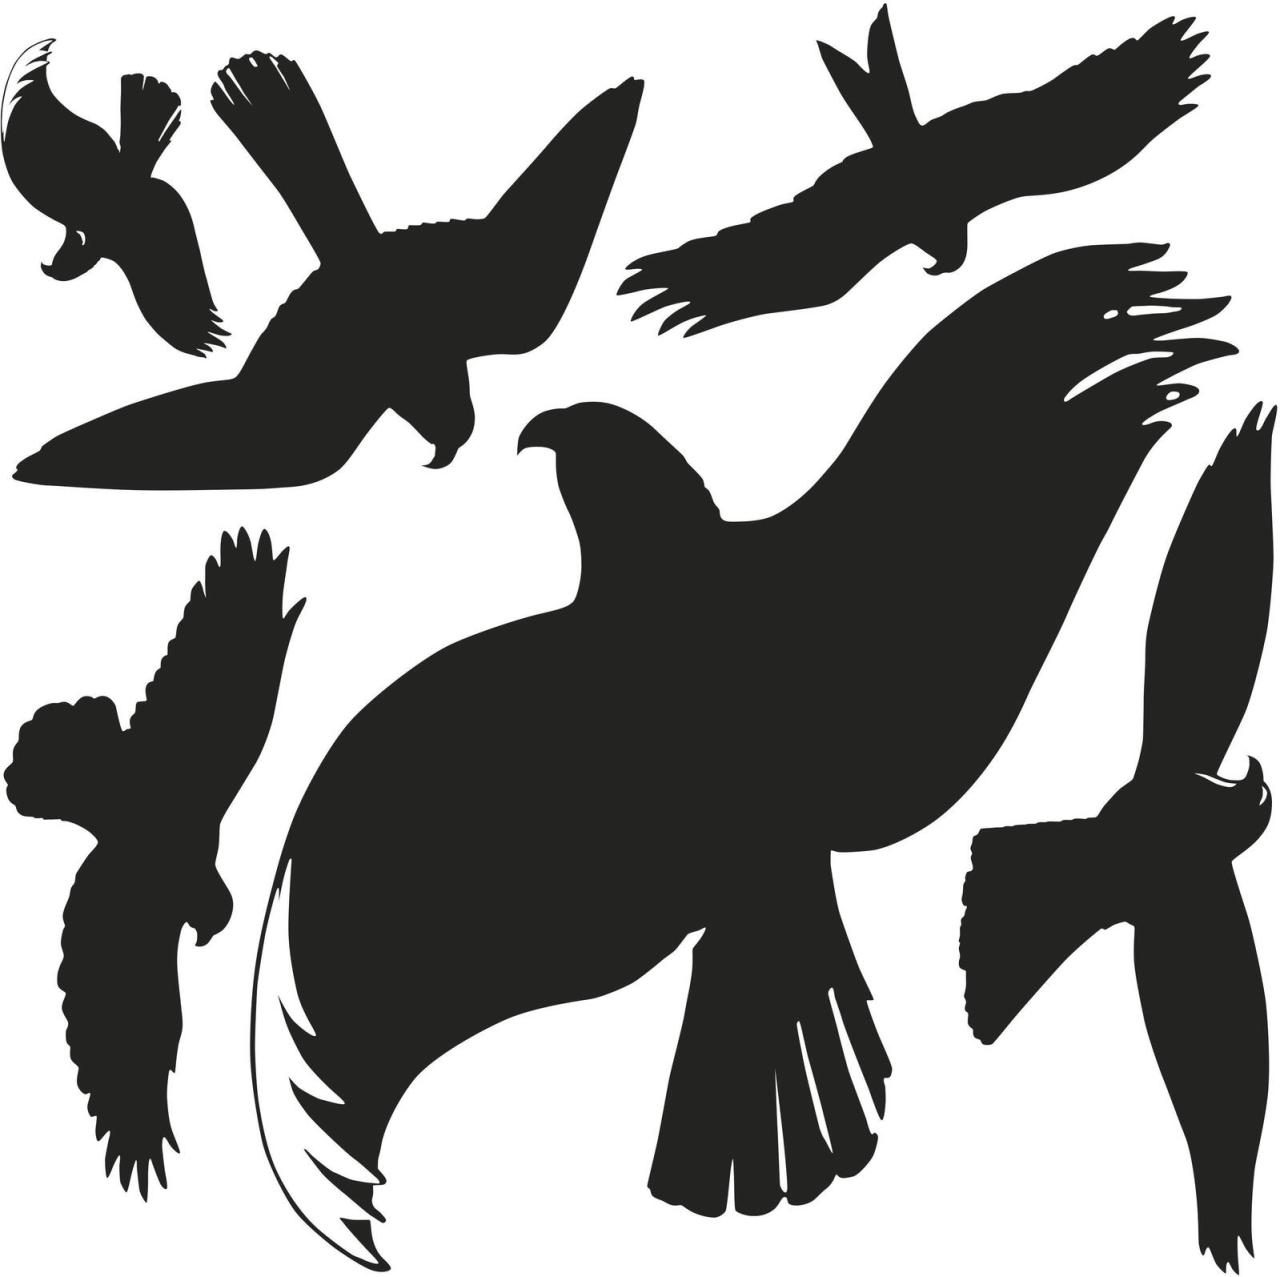 AVERY Zweckform Hinweisaufkleber Avery Schild Fensterwarnvögel 7.6 cm x 12 cm ohne Text